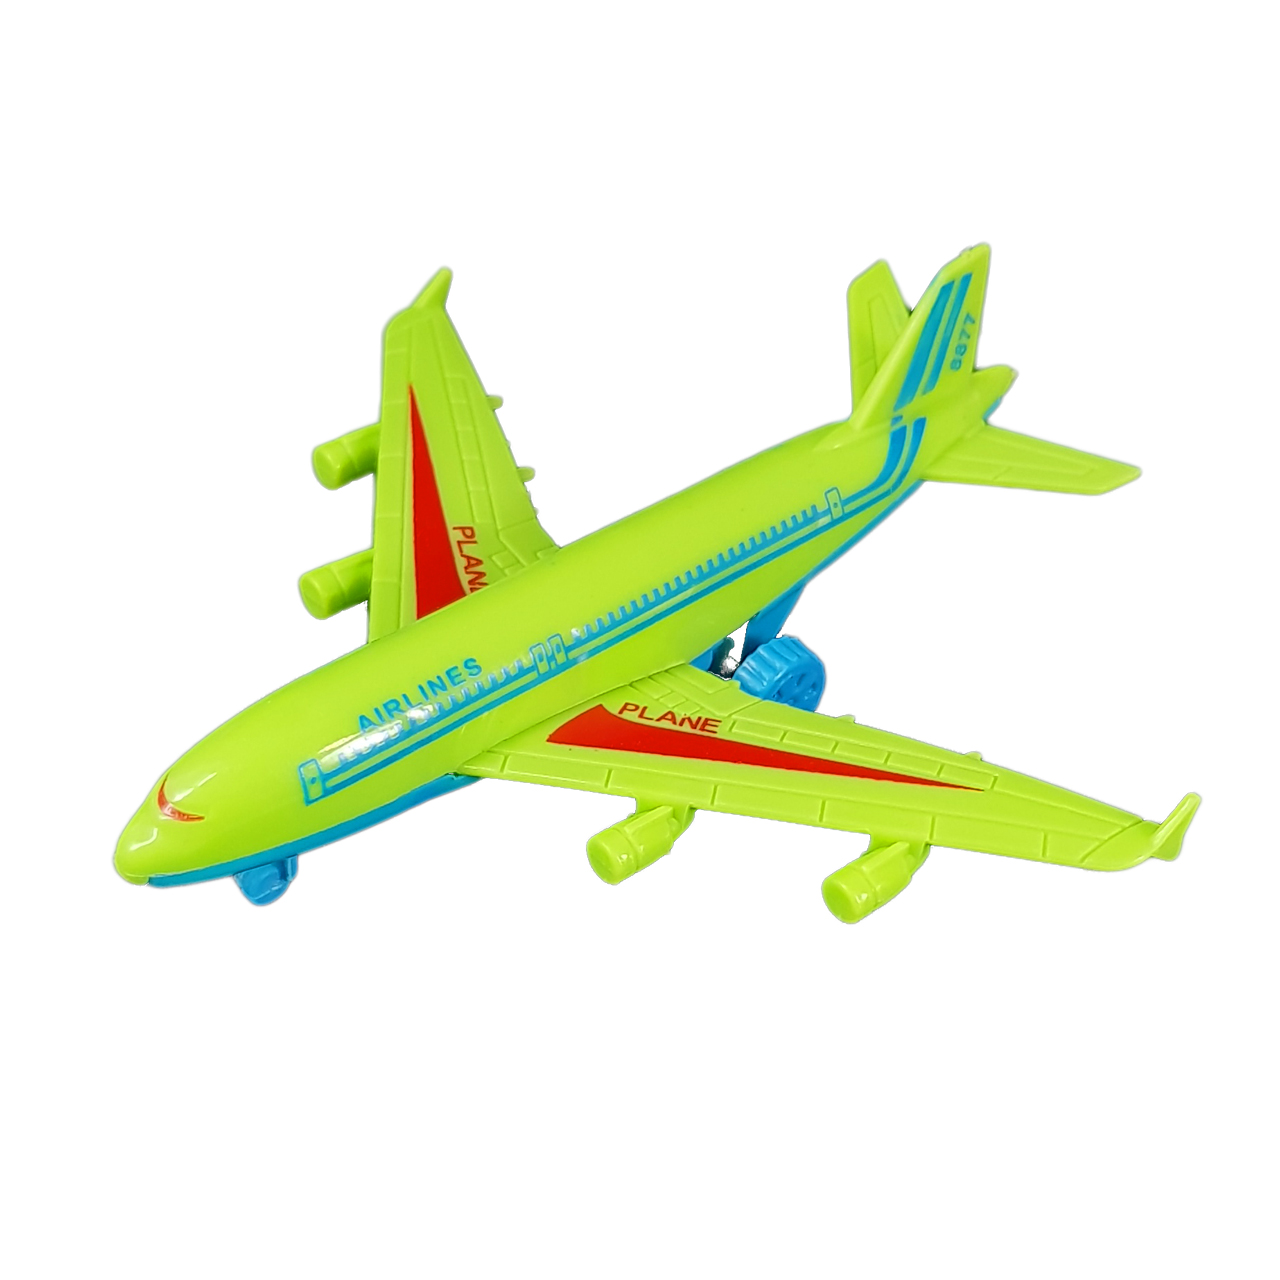 هواپیما بازی مدل Air Lines کد 55